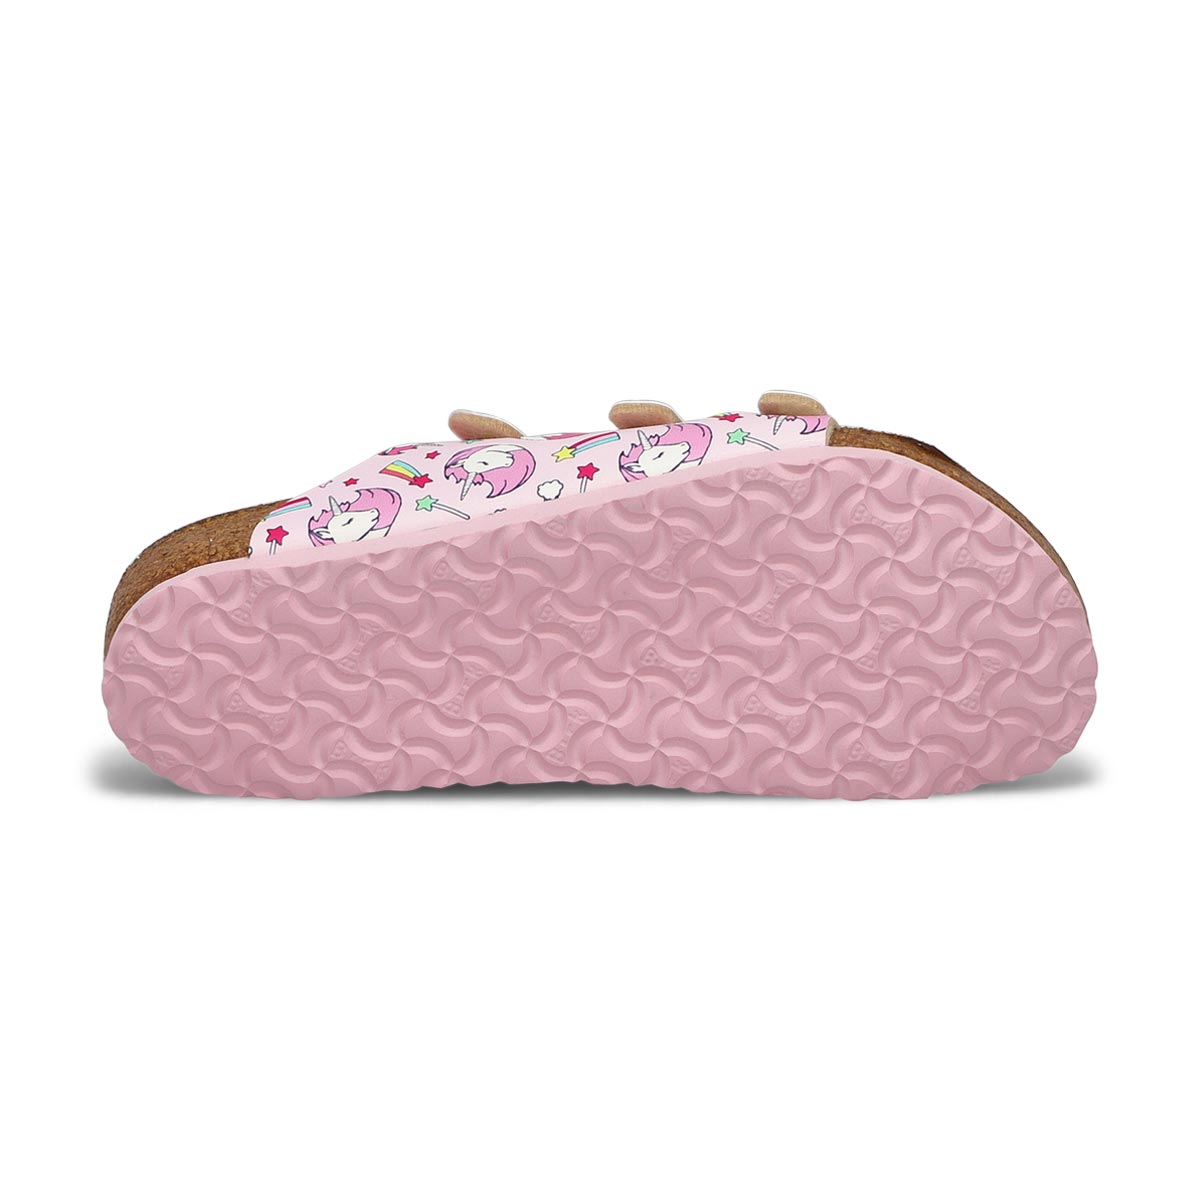 Girls' Florida BF Narrow Sandal - Unicorn Pink